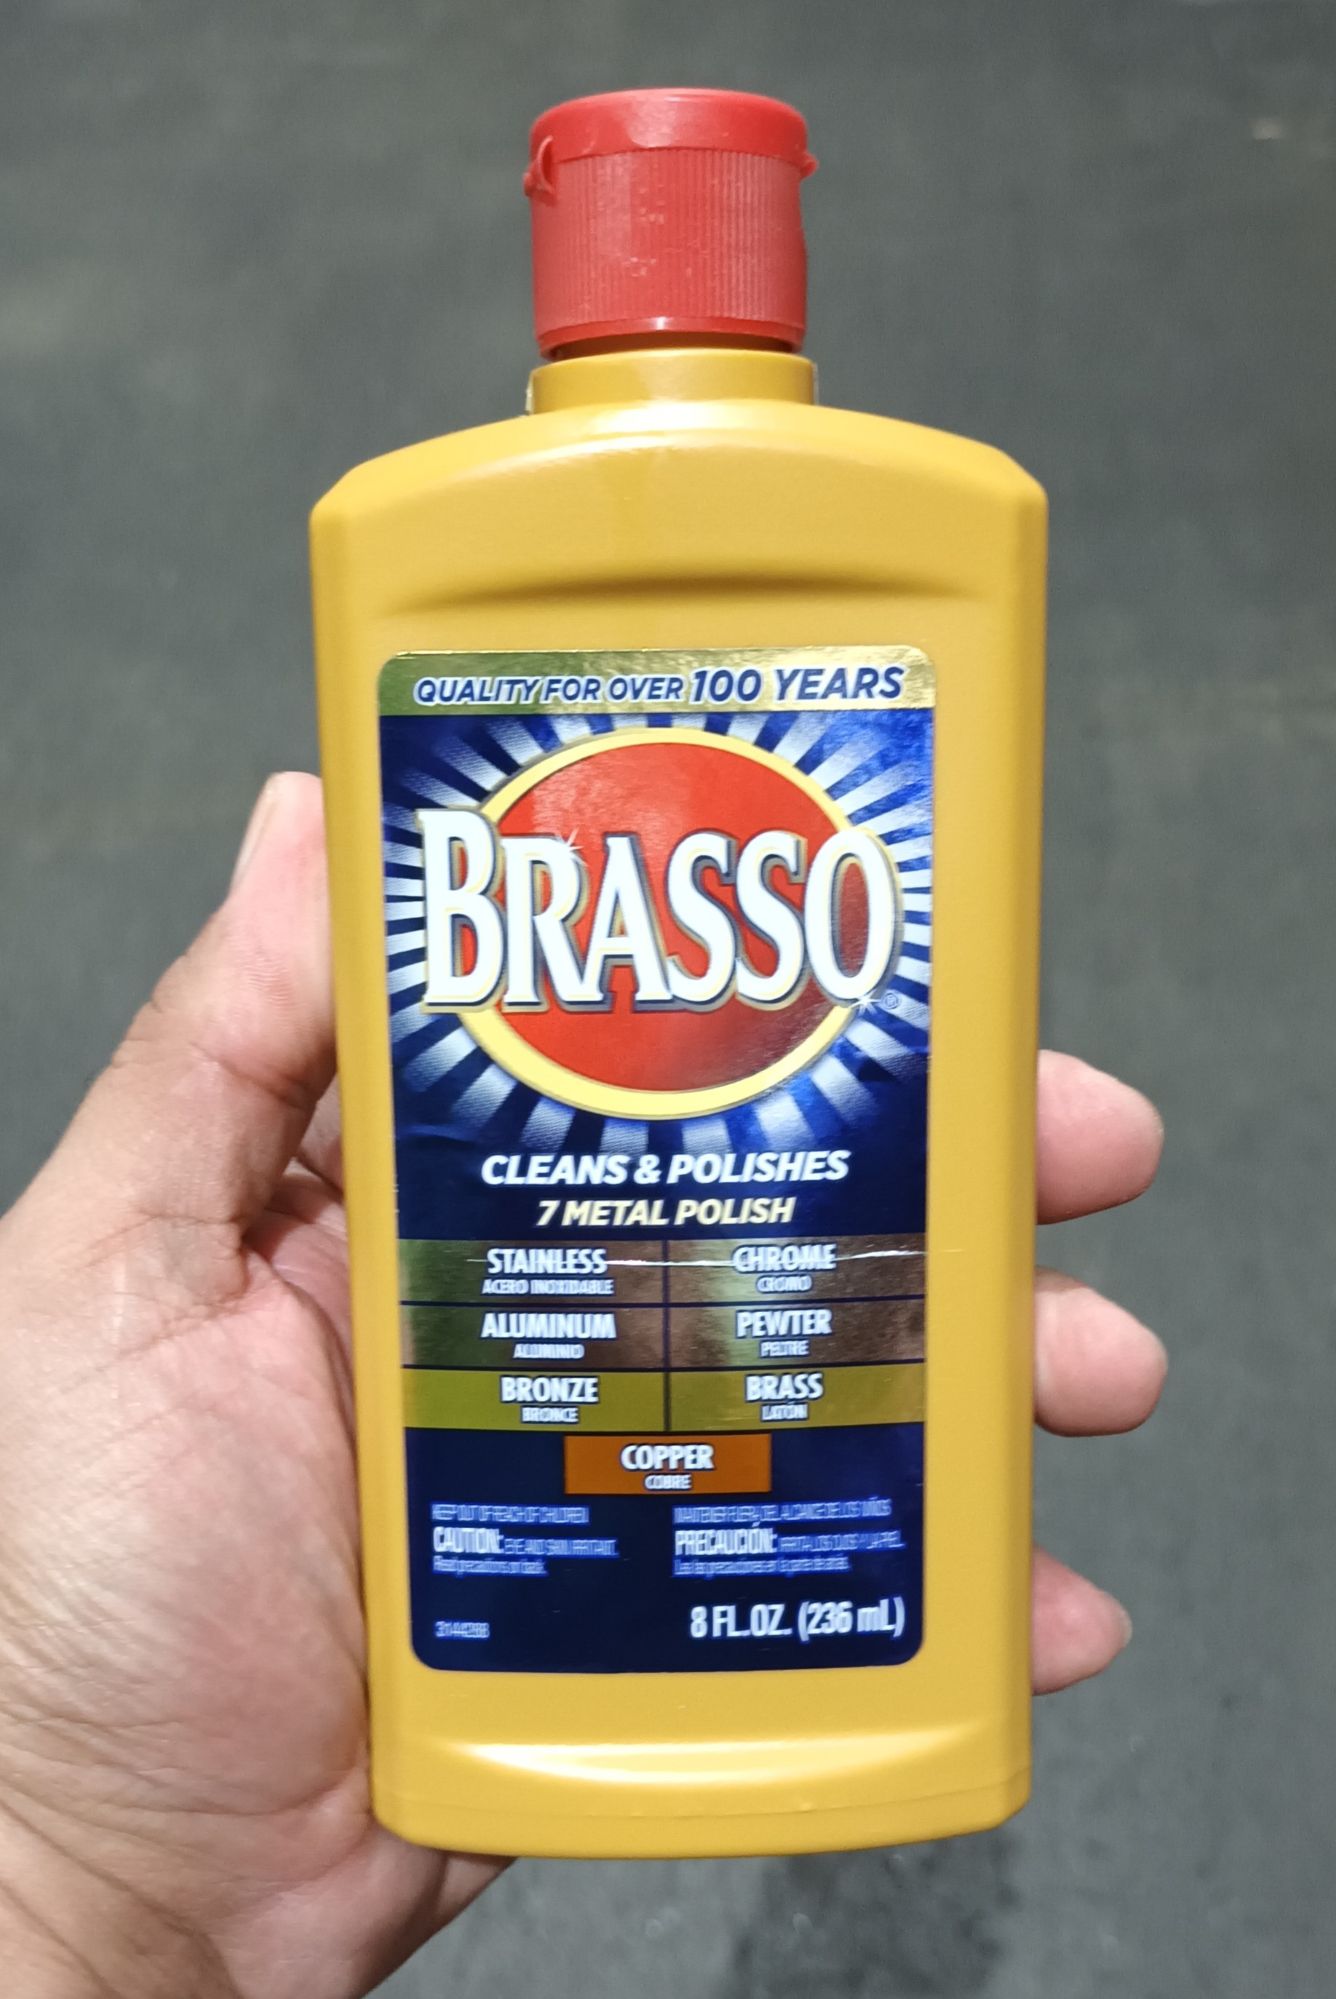 Brasso Multi-Purpose Metal Polish, 8 oz 